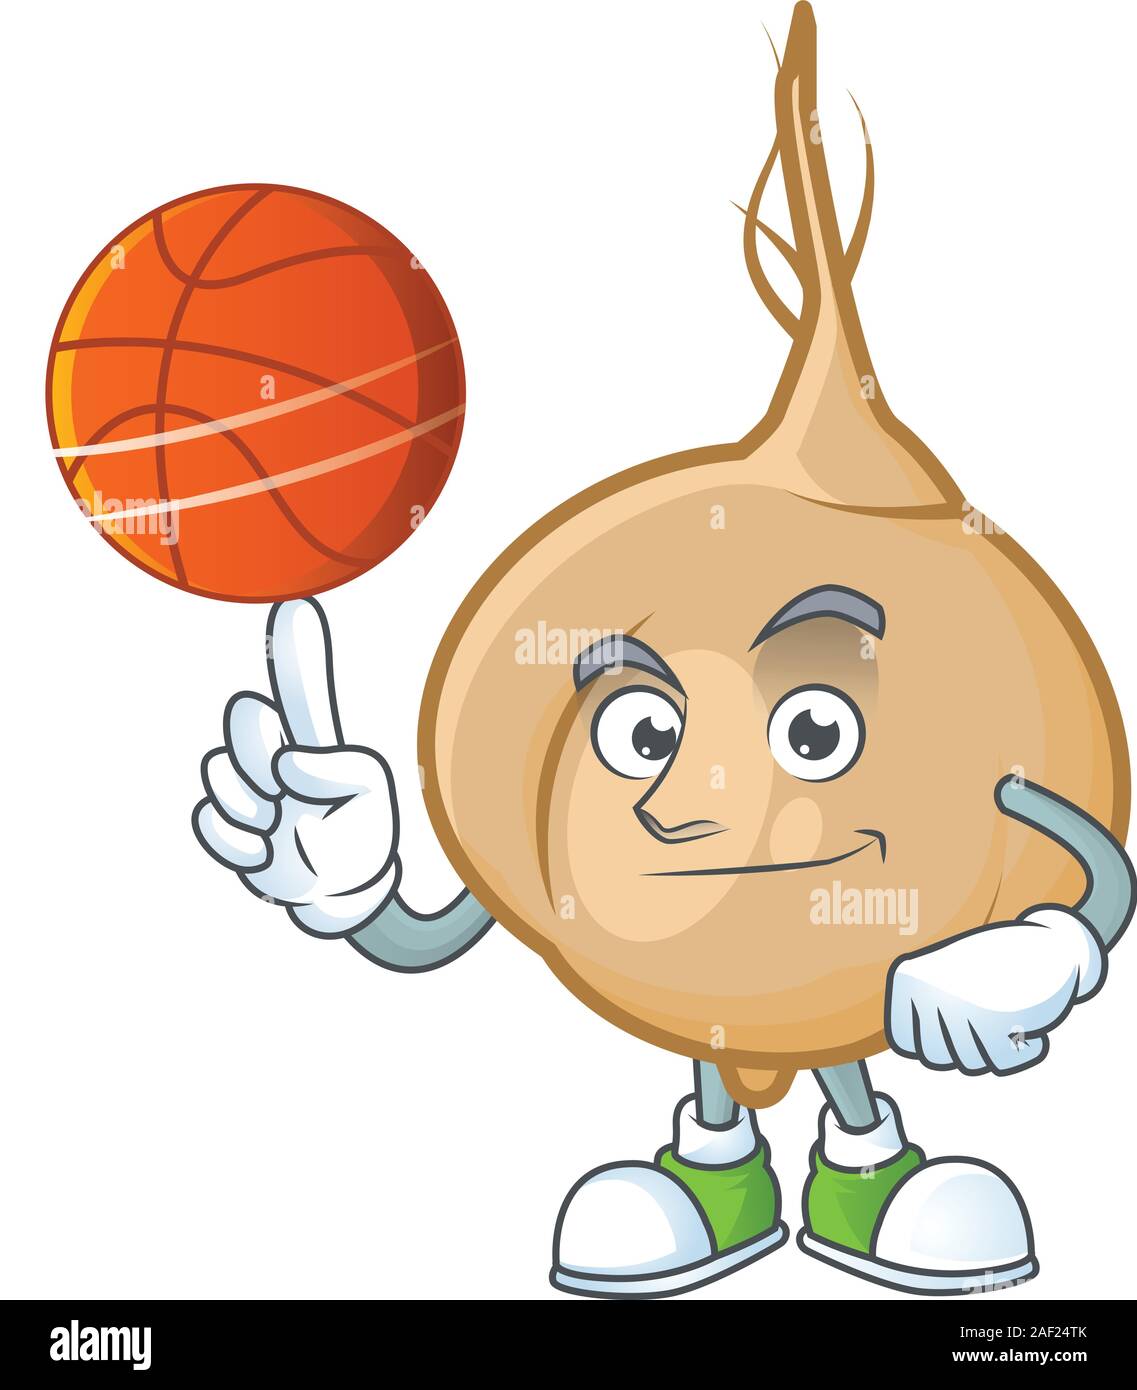 Mascot of jicama cartoon character style with basketball Stock Vector